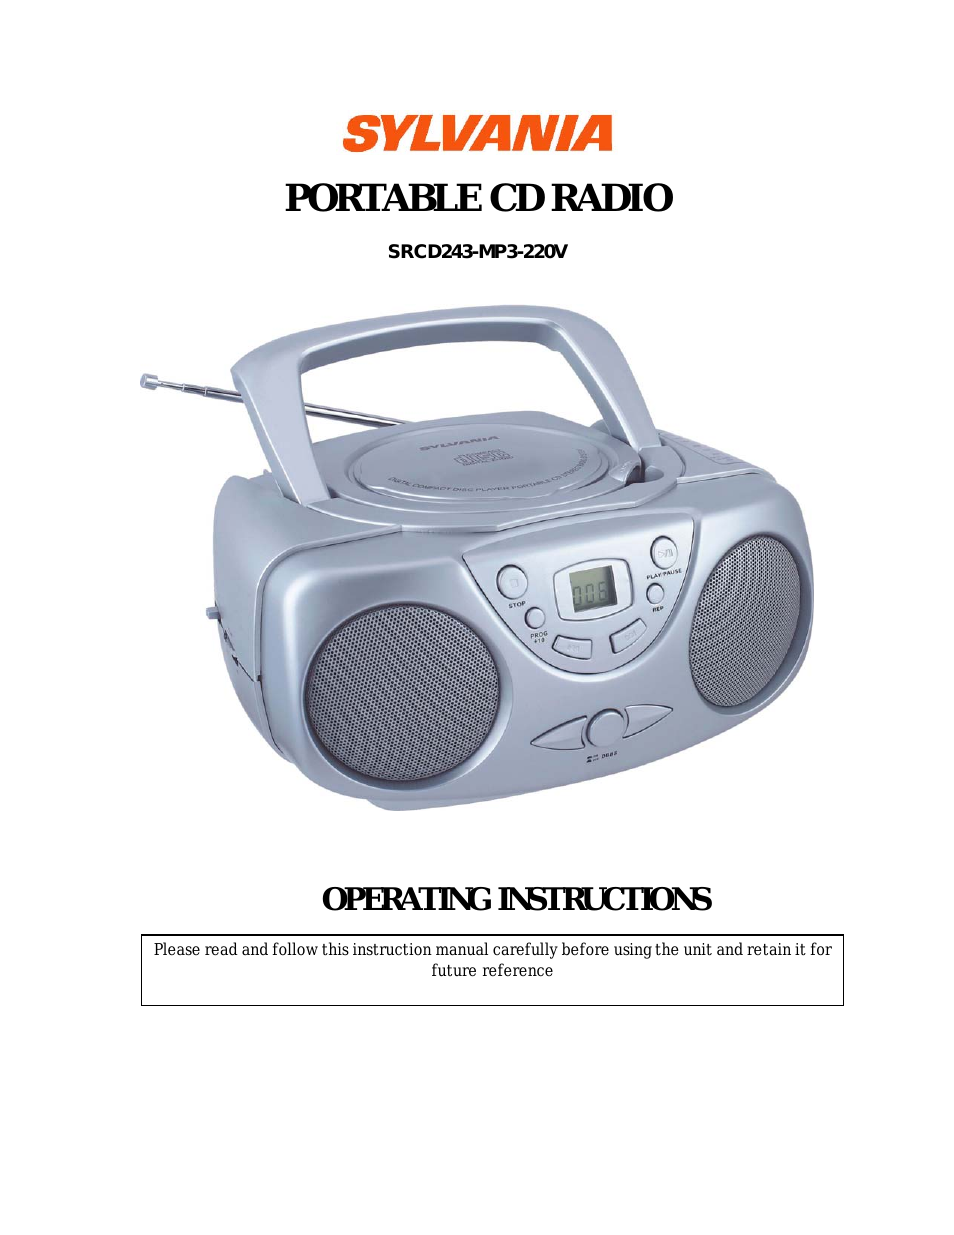 SRCD243-MP3-220V